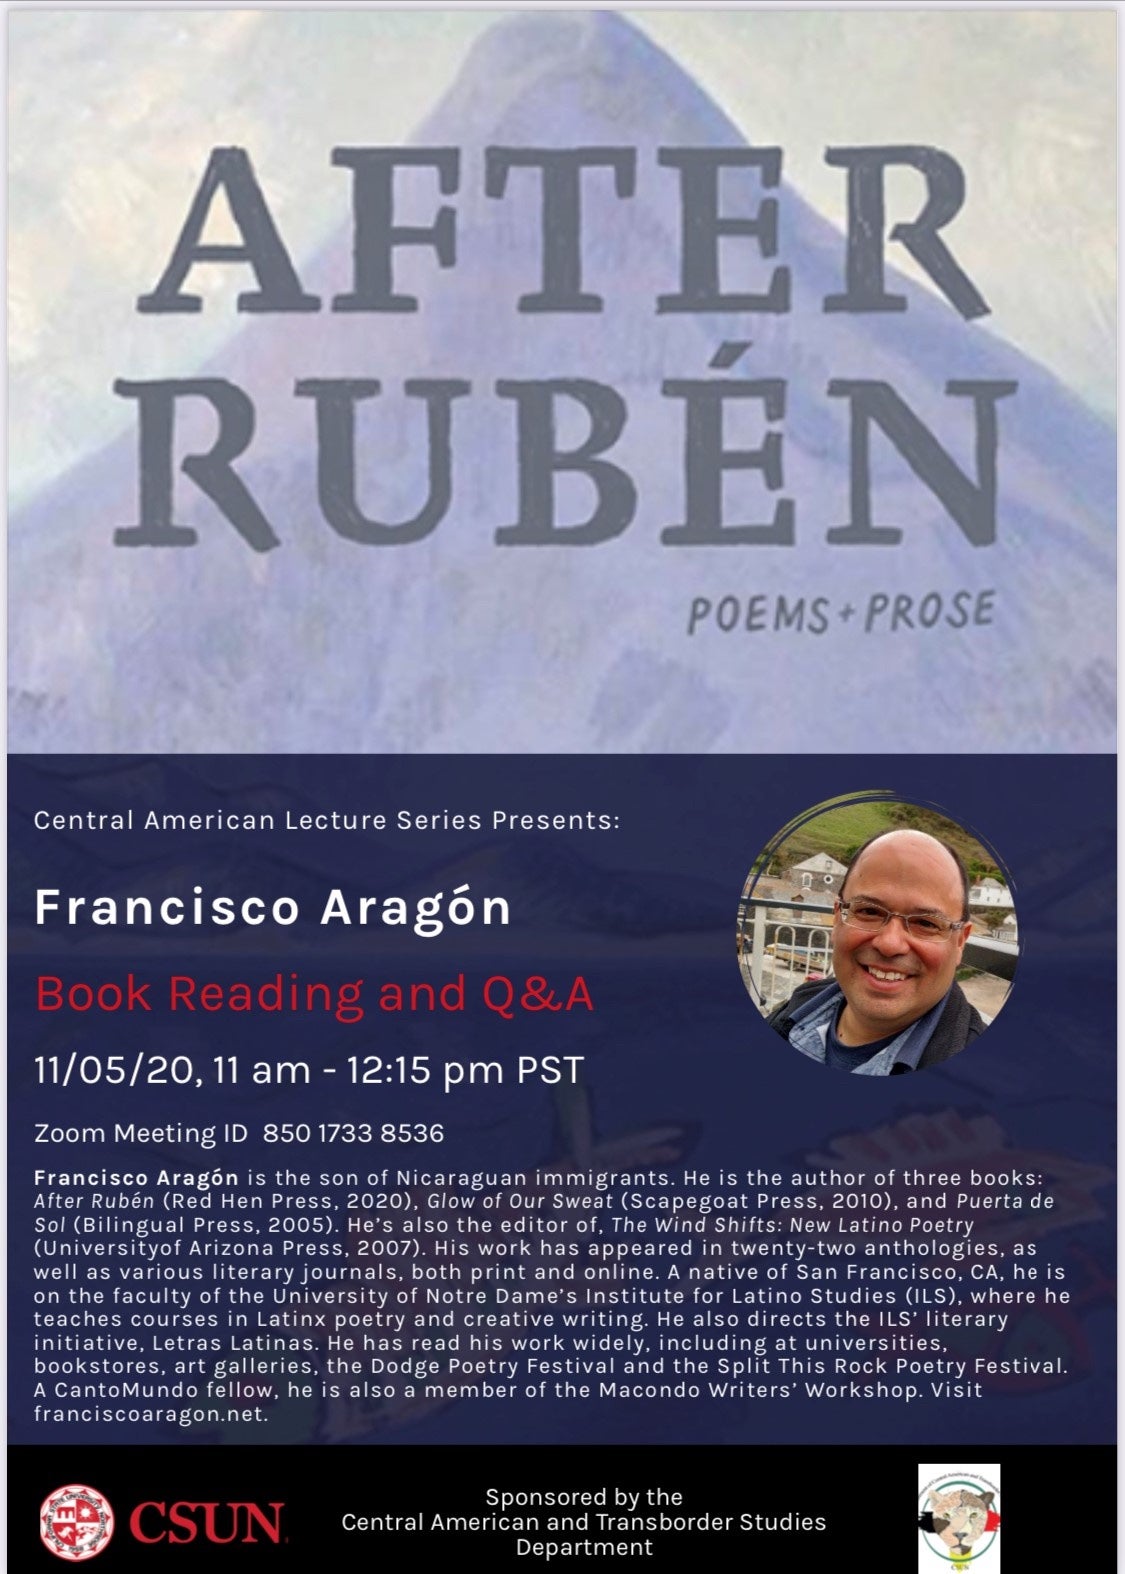 Francisco Aragon reading After Ruben, 11/05 online